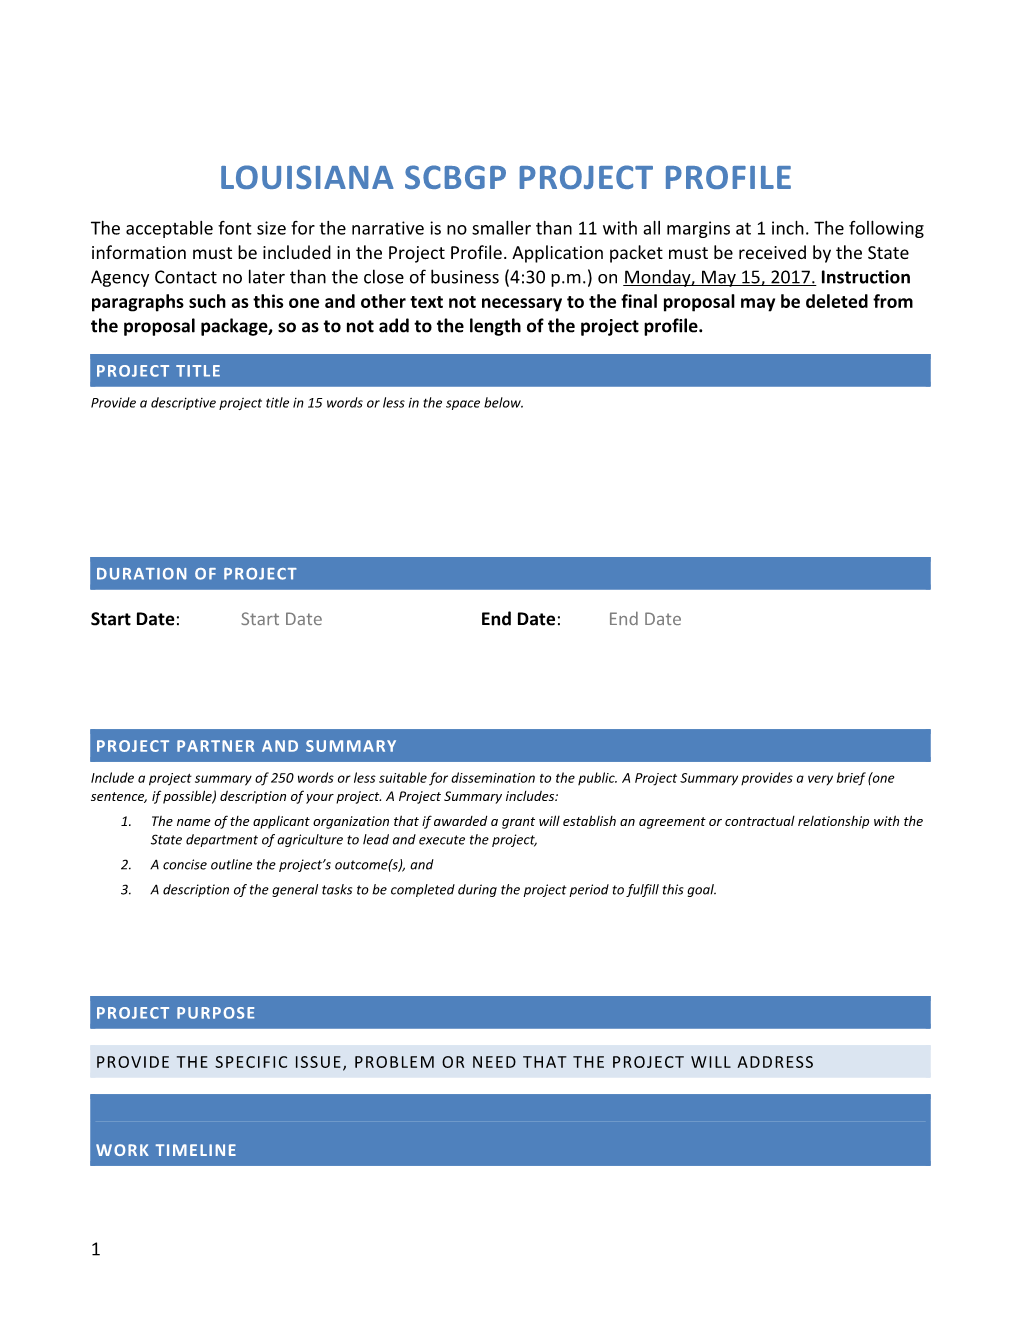 Louisiana SCBGP Project Profile